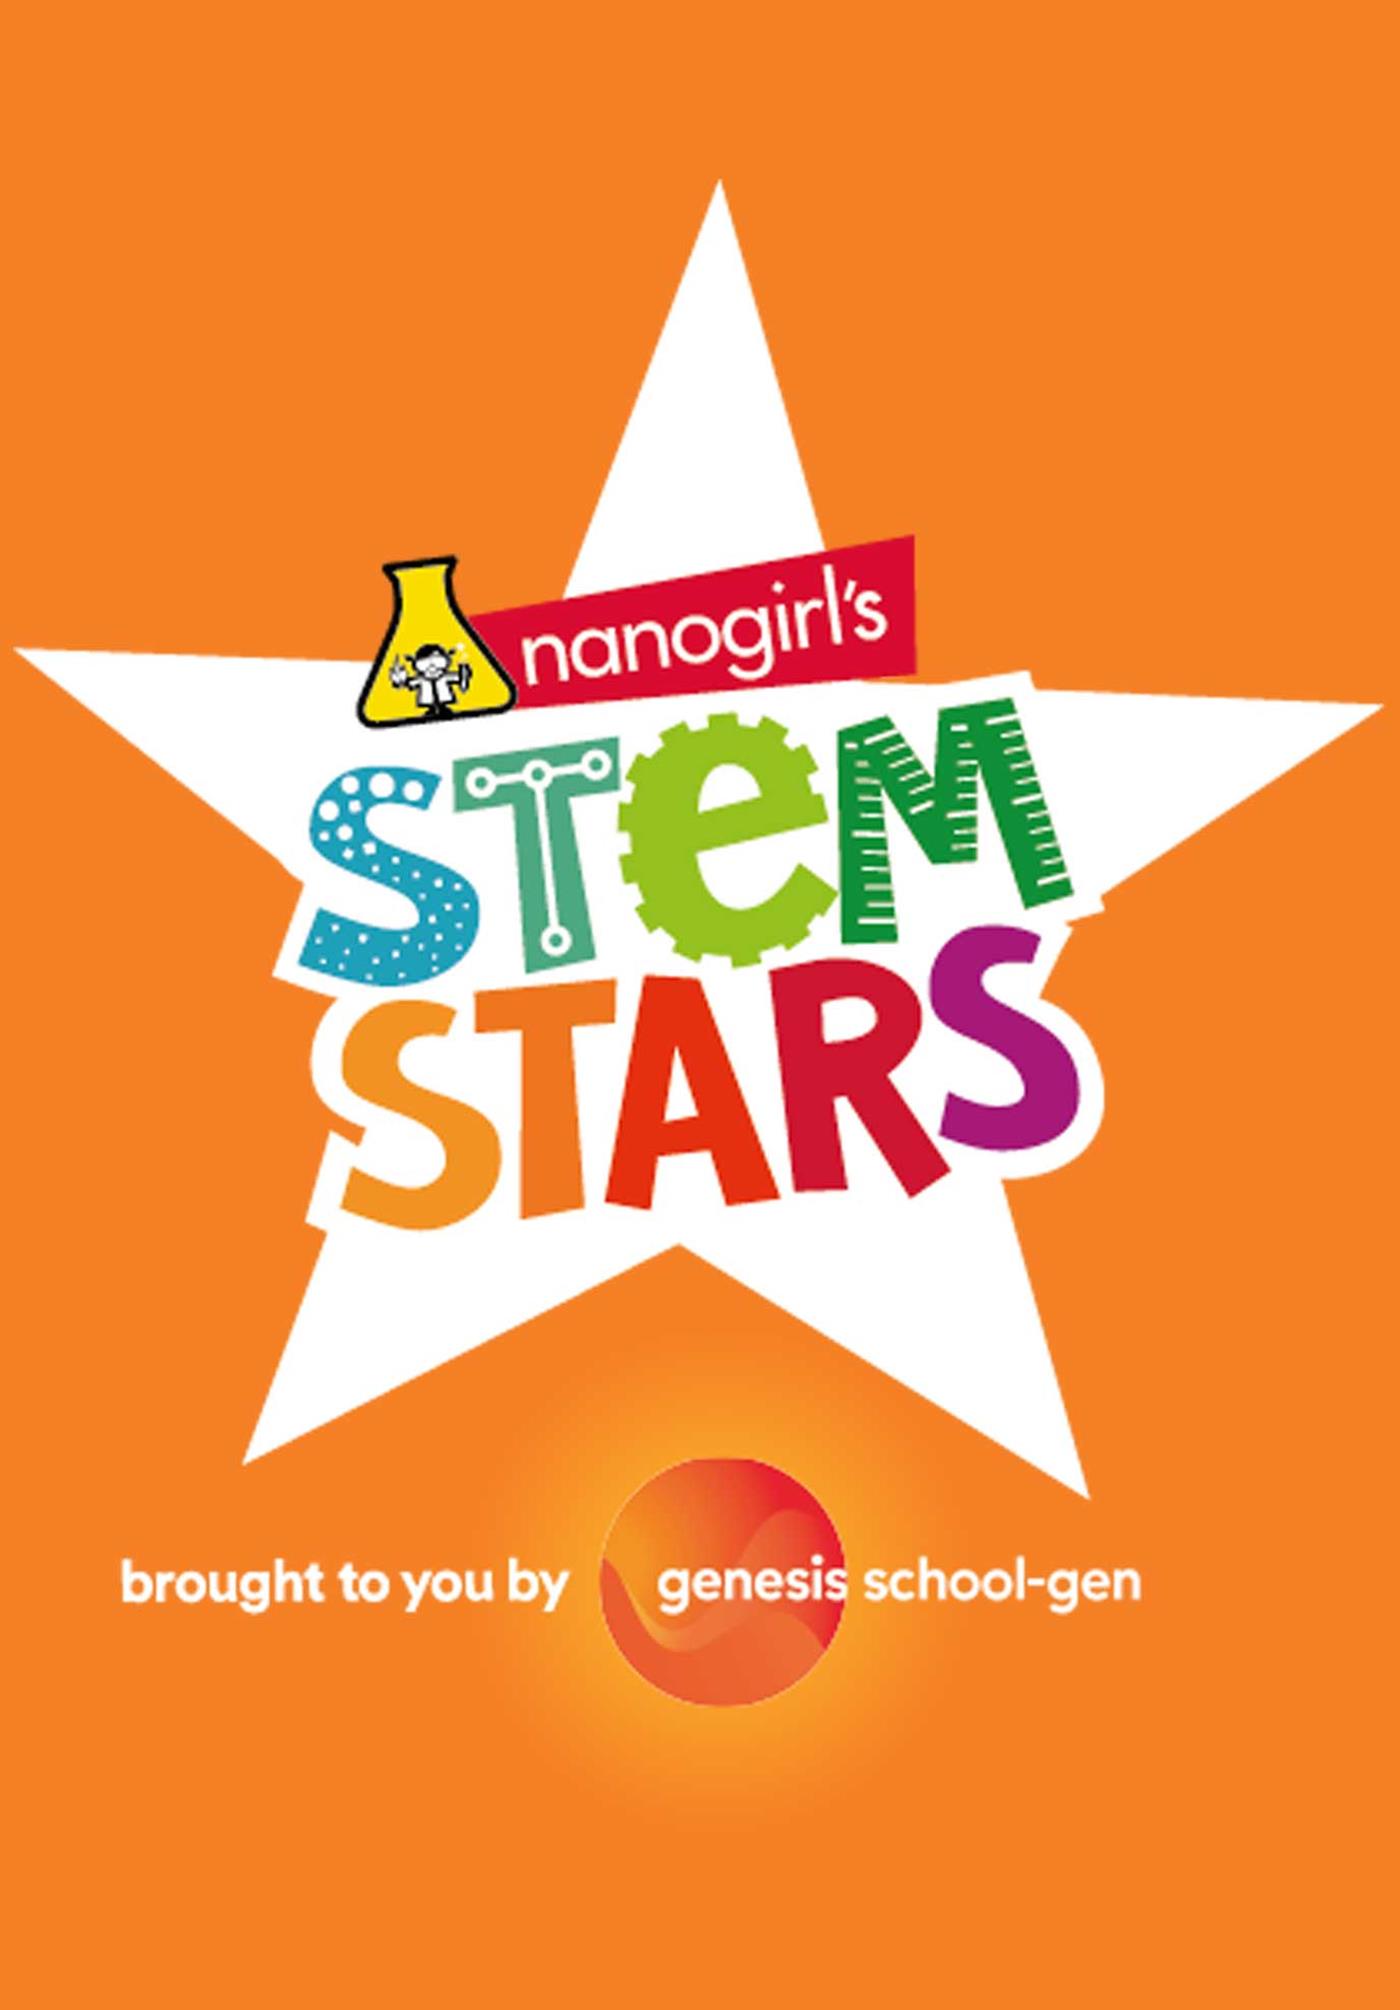 Nanogirl's stem stars logo